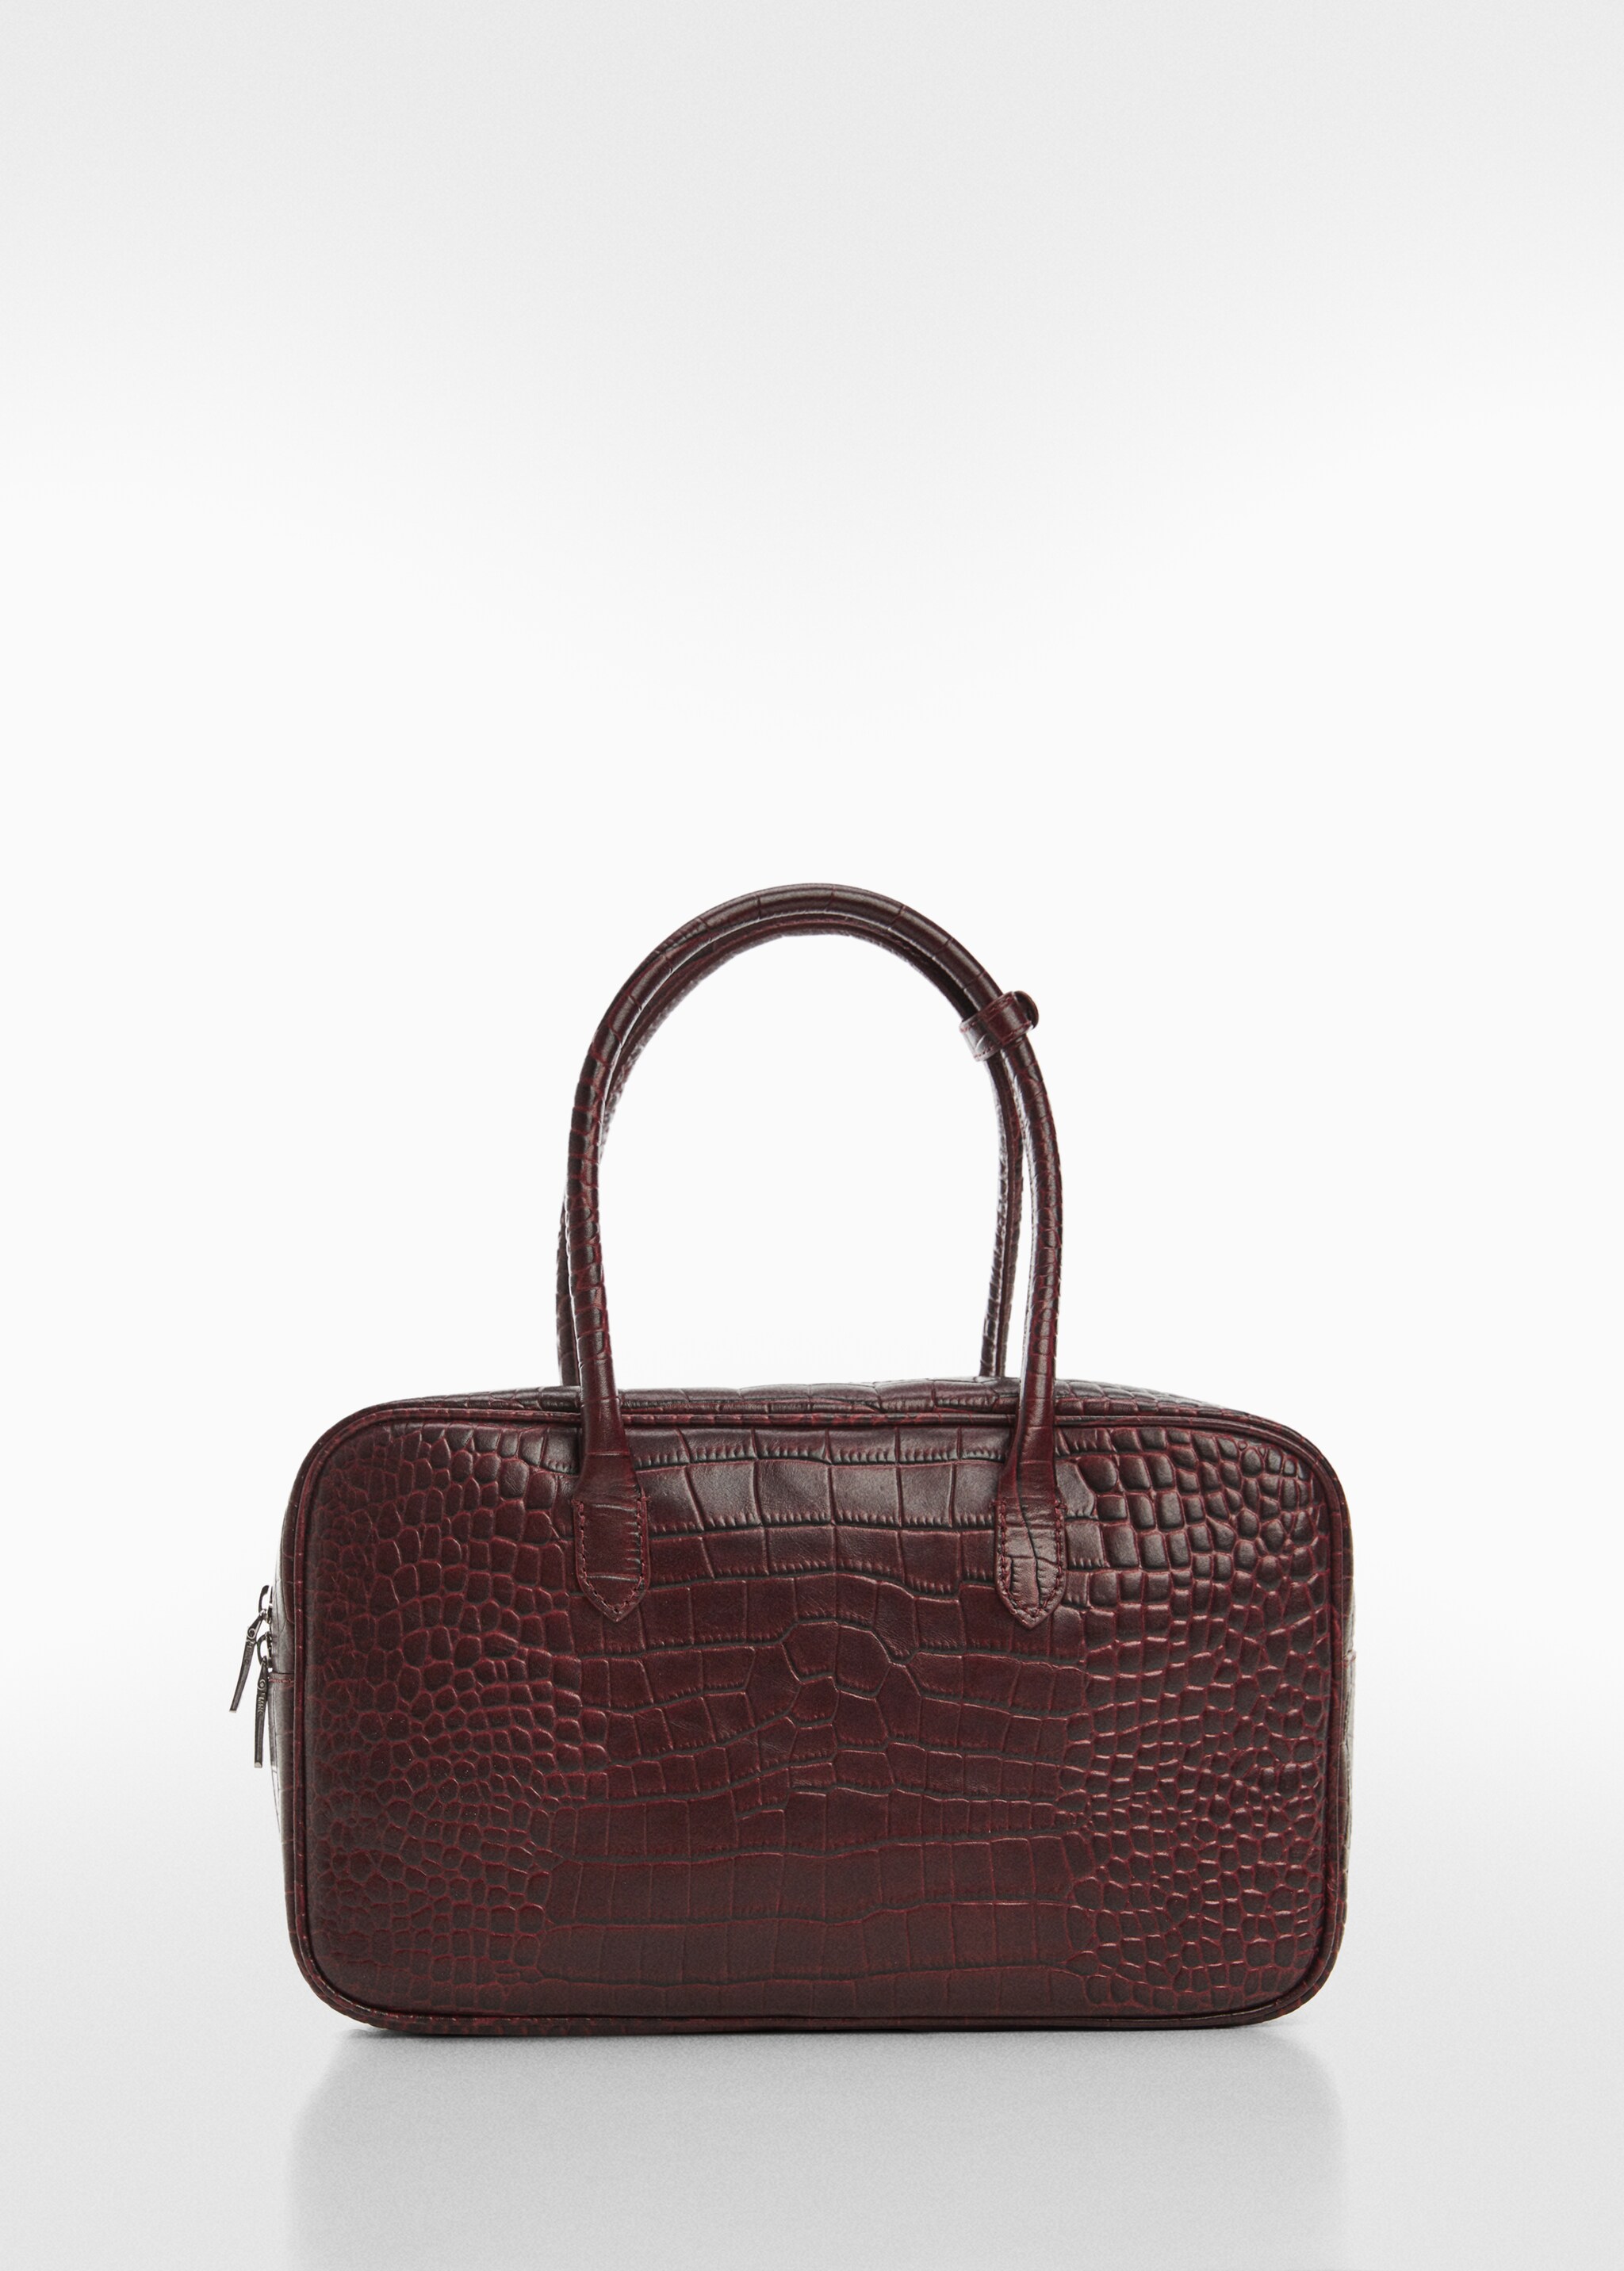 Rectangular leather handbag - Article without model